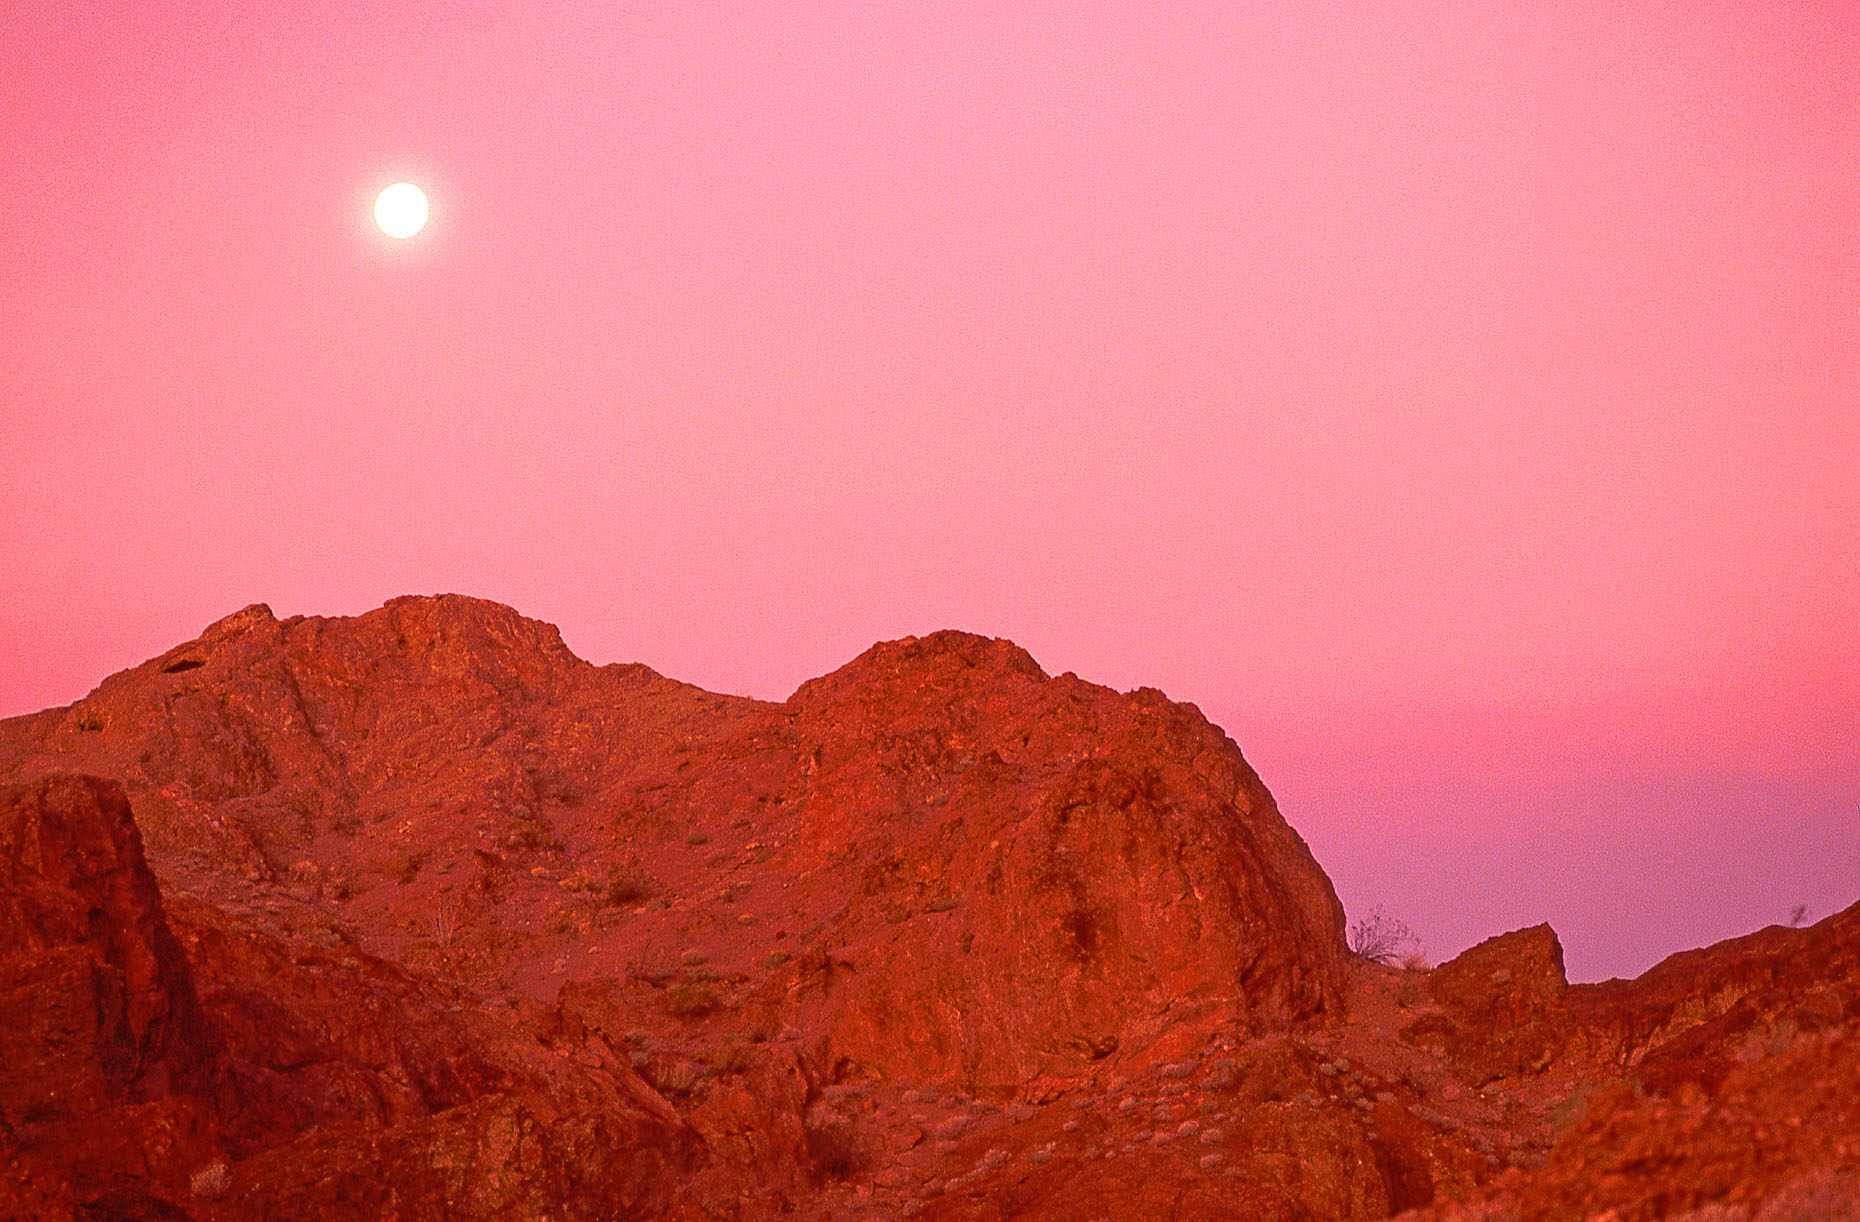 Sunset moon glow, Chemehuevi Mountains Wilderness, John Annerino, Mojave Desert, CA